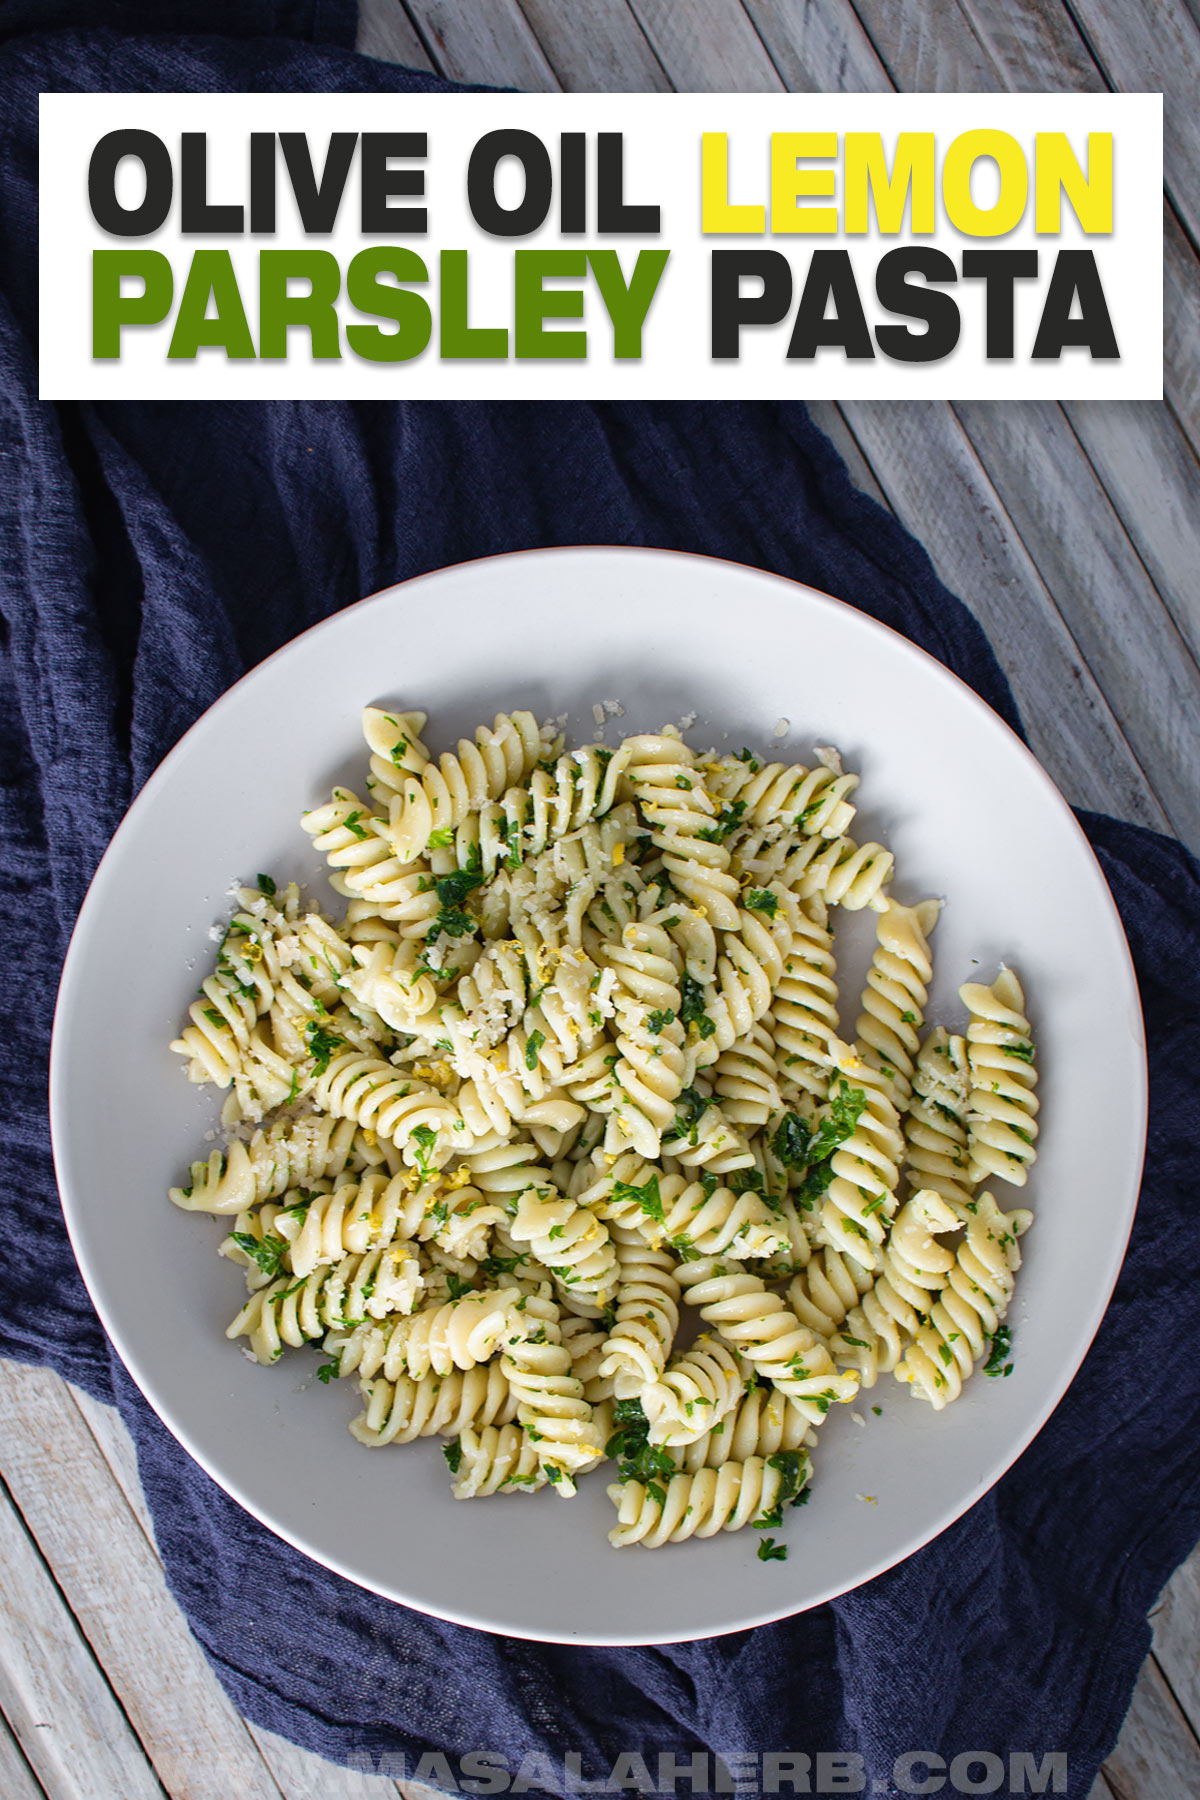 Olive Oil Lemon Parsley Pasta Recipe cover image